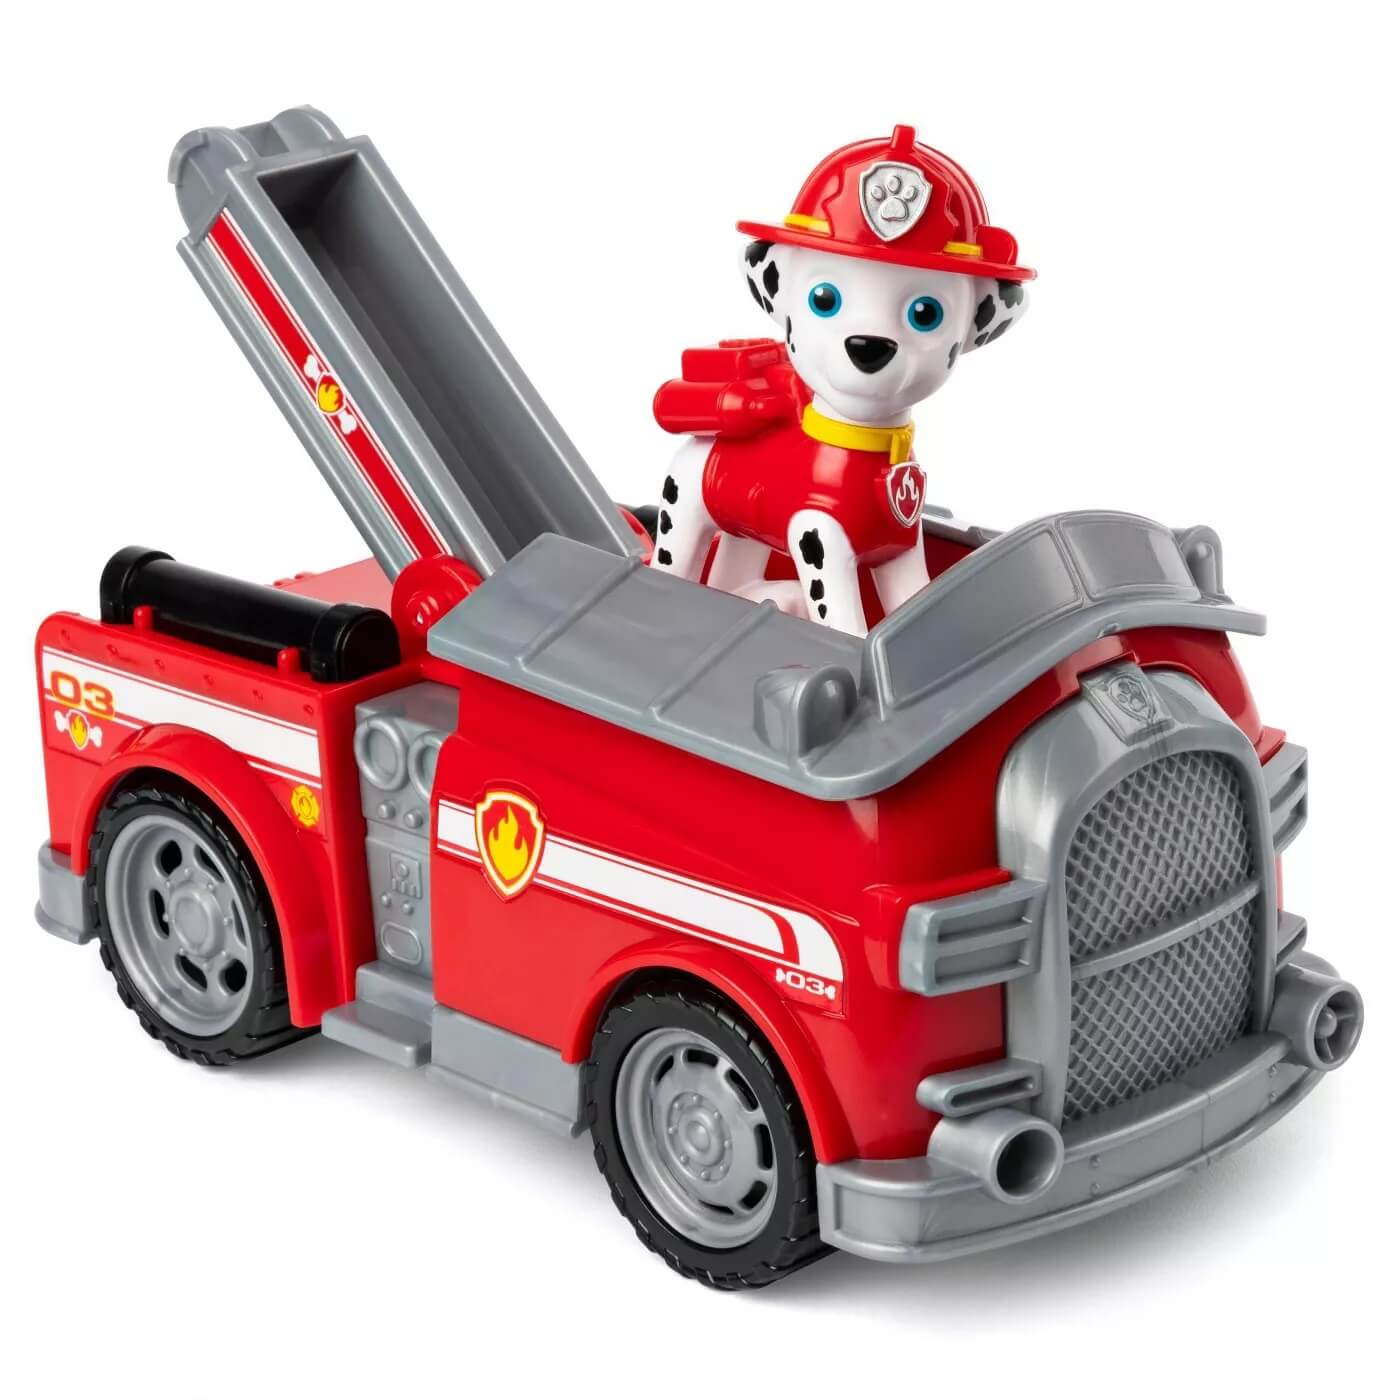 PAW Patrol Fire Engine Vehicle with Marshall Figure